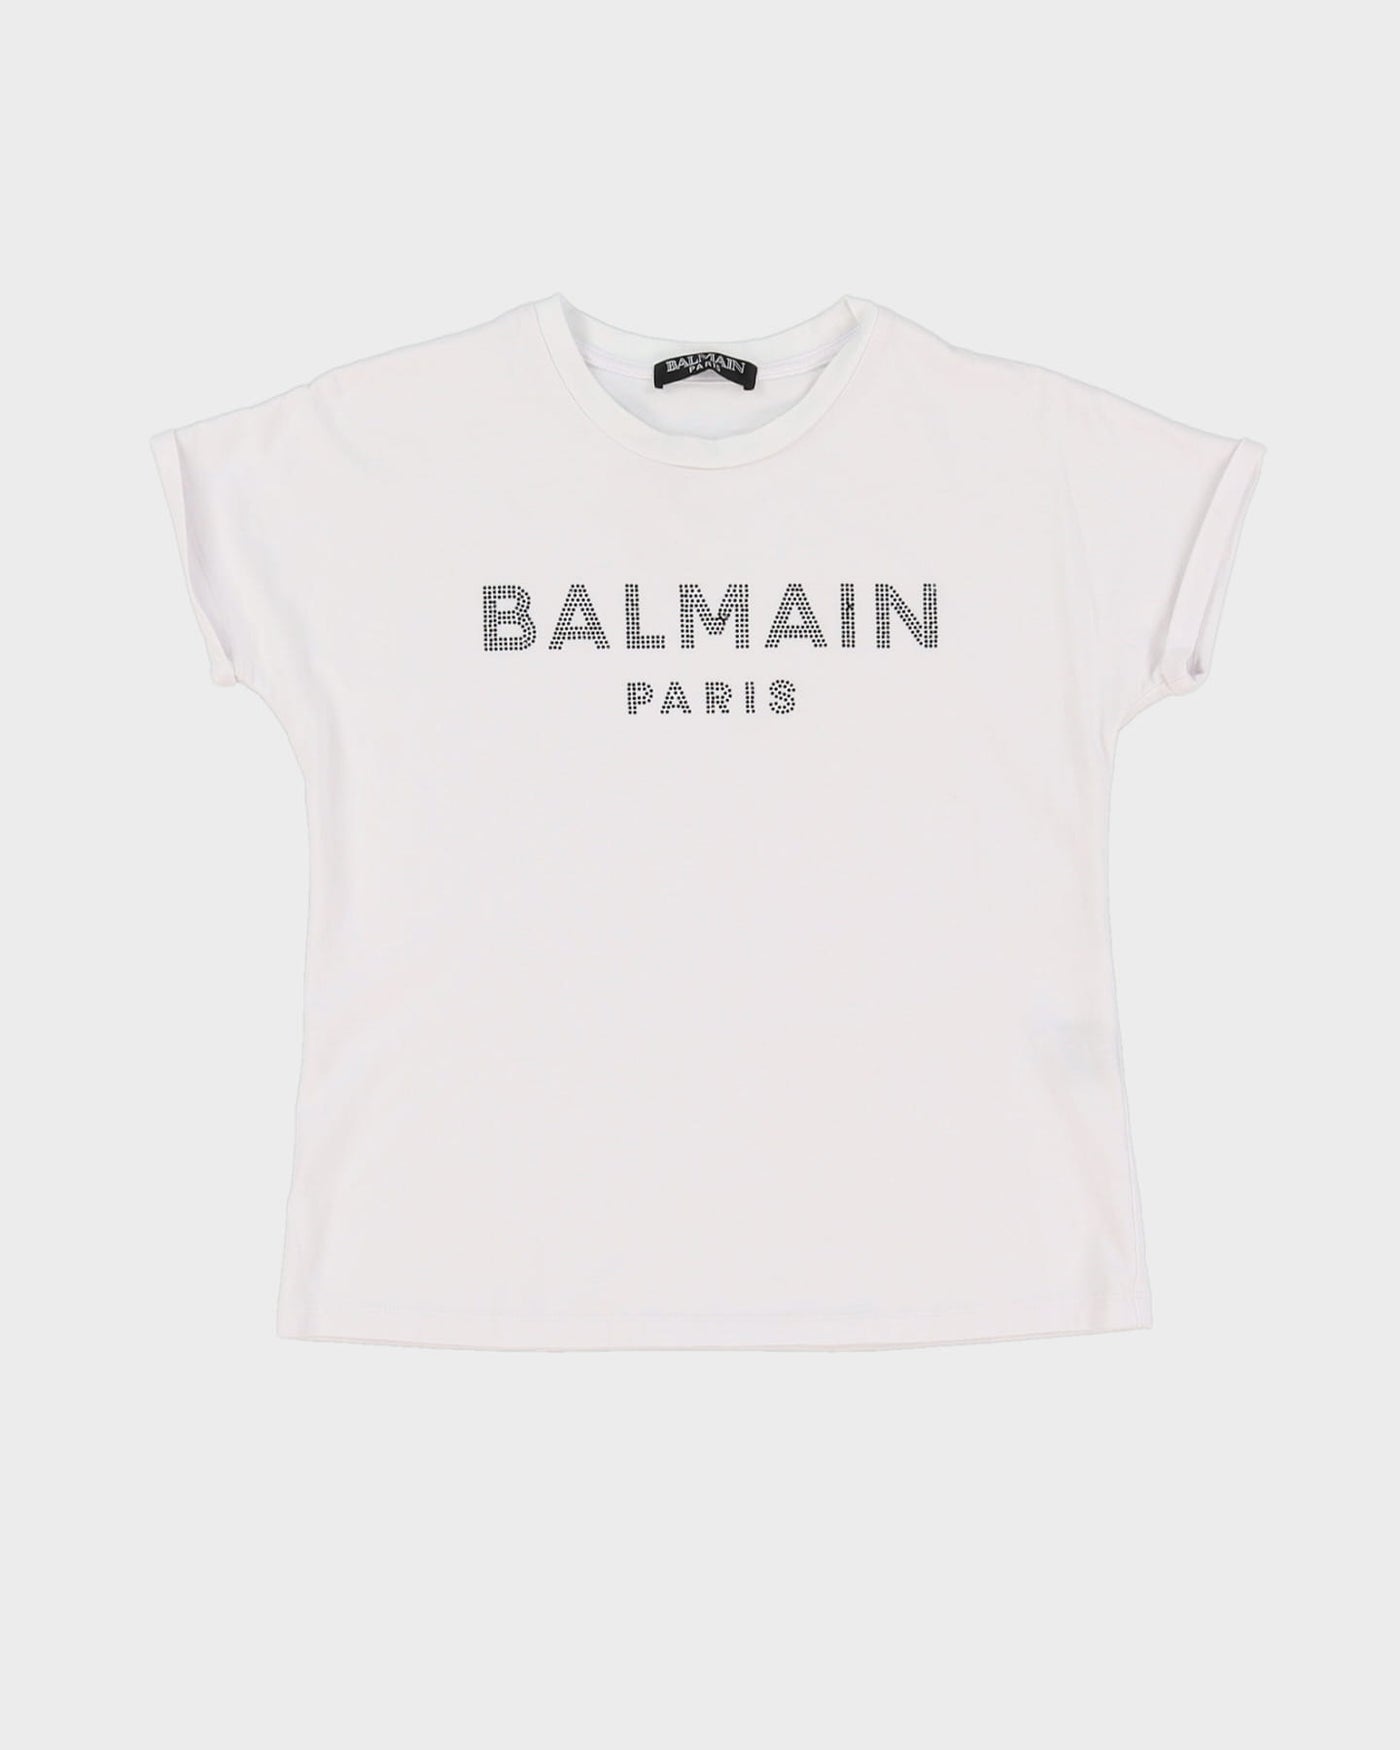 Balmain Y2K Style Baby Fit White T-Shirt - S